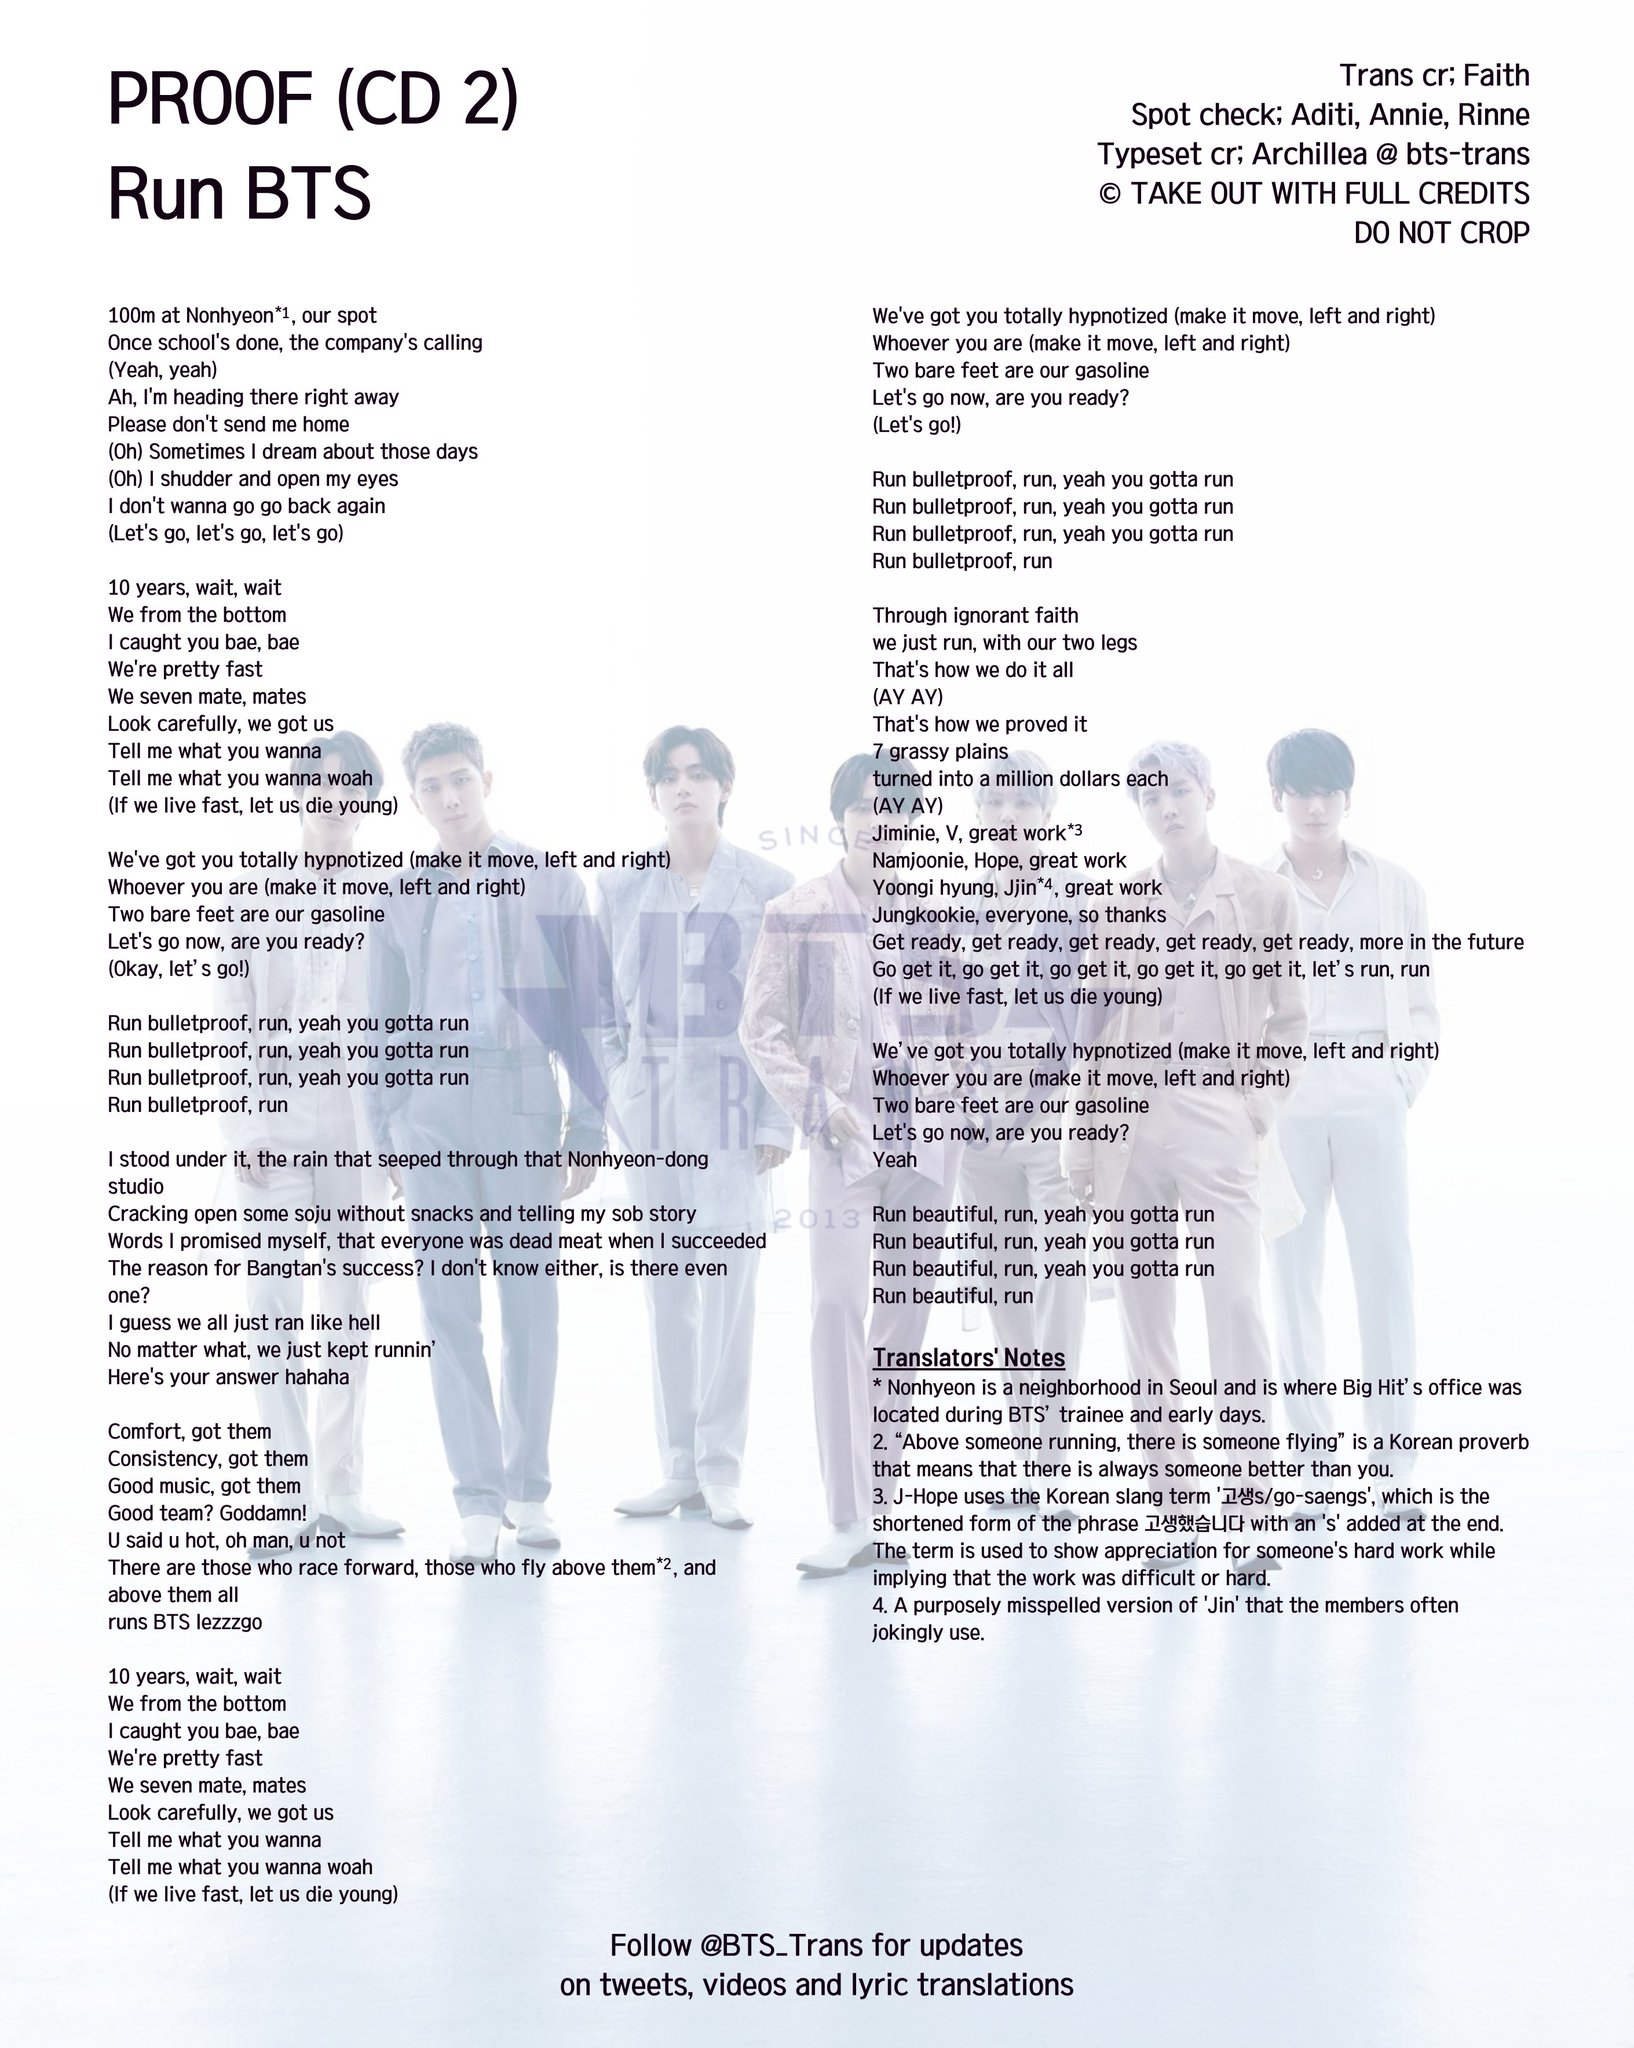 BTS Lyrics ⁷ on X: Stop runnin' for nothin' Paradise - BTS --- @BTS_twt  #lyrics #AnswerIn7Days #LOVE_YOURSELF  / X